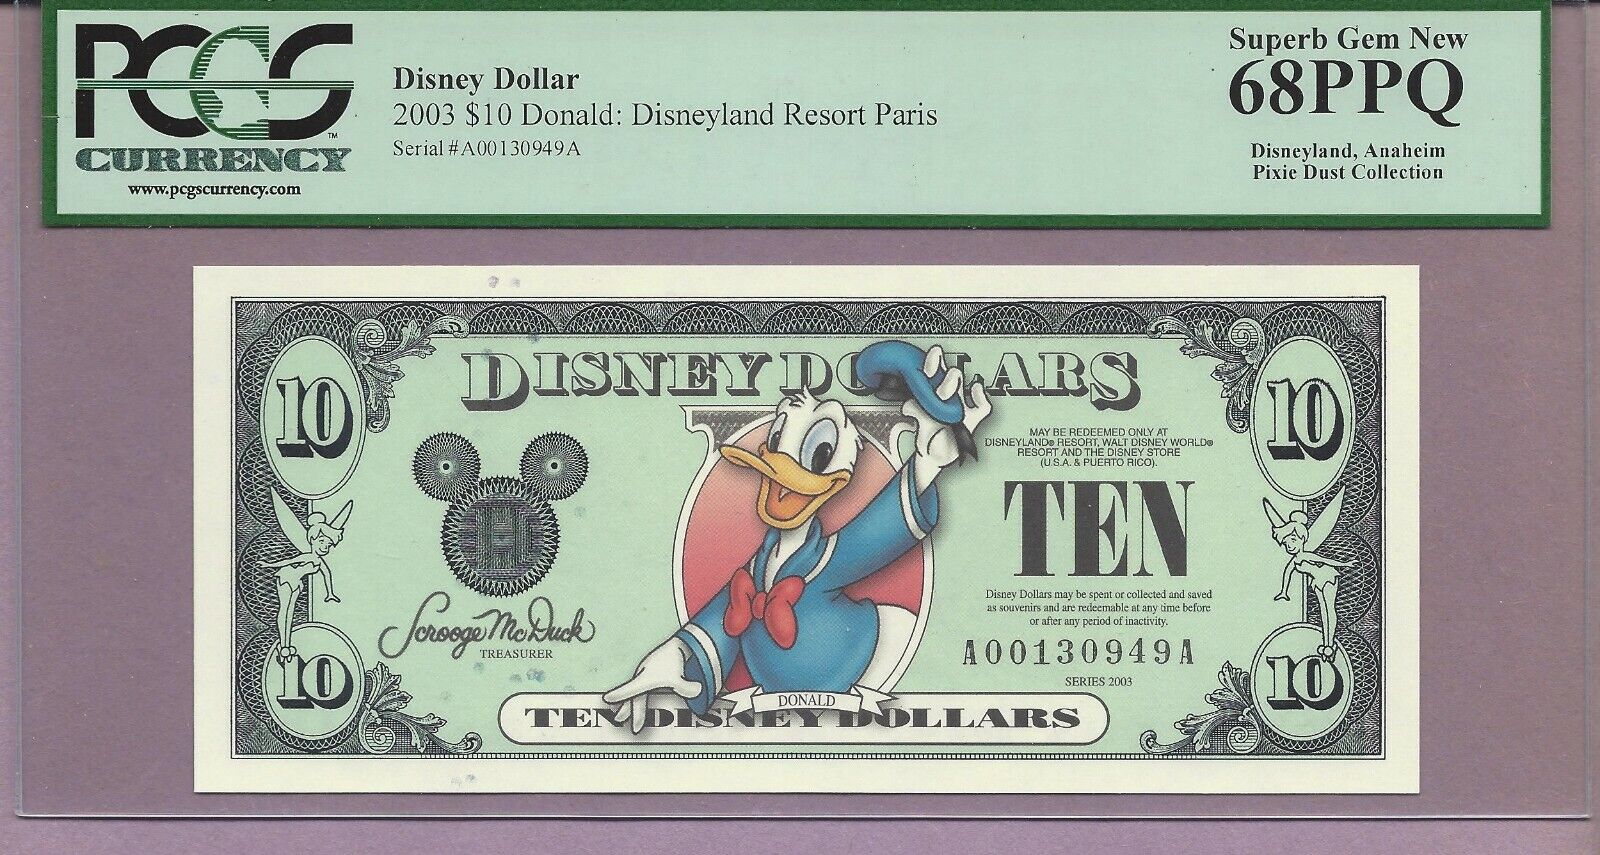 2003 $10A Donald Disney Dollar PCGS PPQ SUPERB GEM NEW